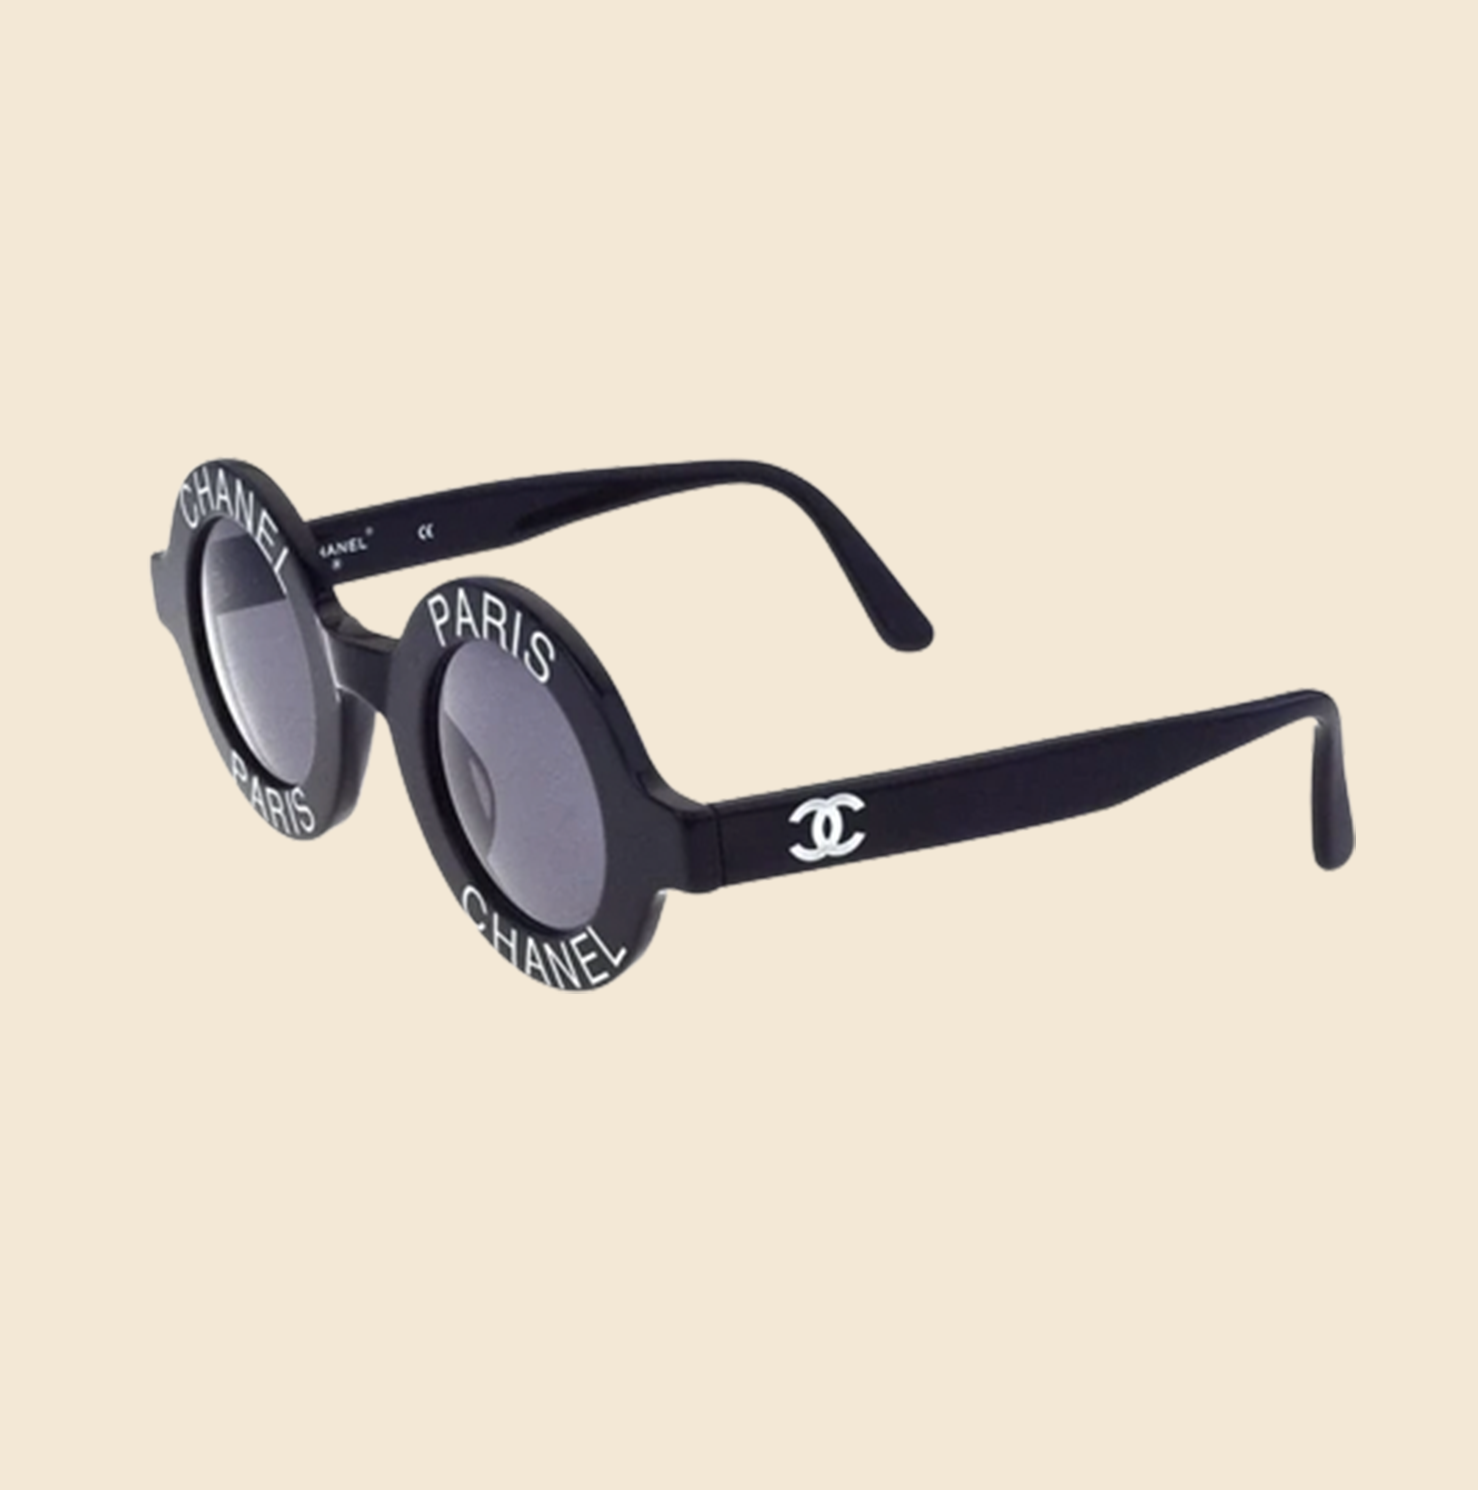 Chanel sunglasses  Chanel sunglasses, Chanel glasses, Sunglasses logo